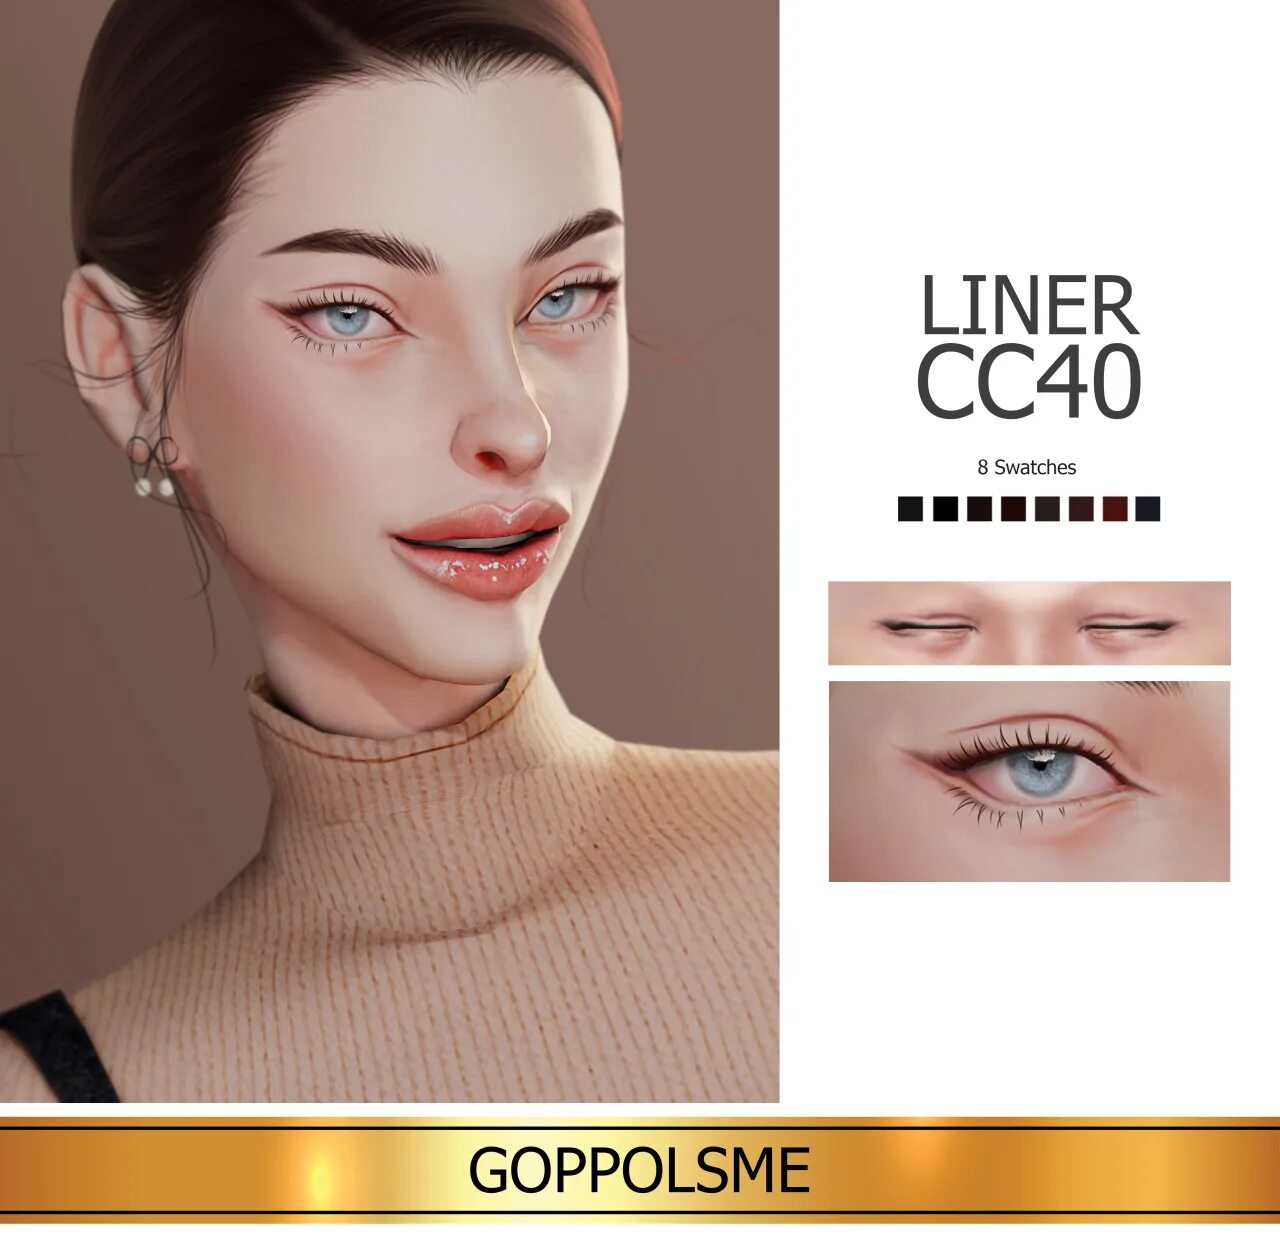 Cc line. GPME-Gold Liner cc34. Liner cc40 goppolosme. GPME M Liner cc3.package. Scmidt cc line.